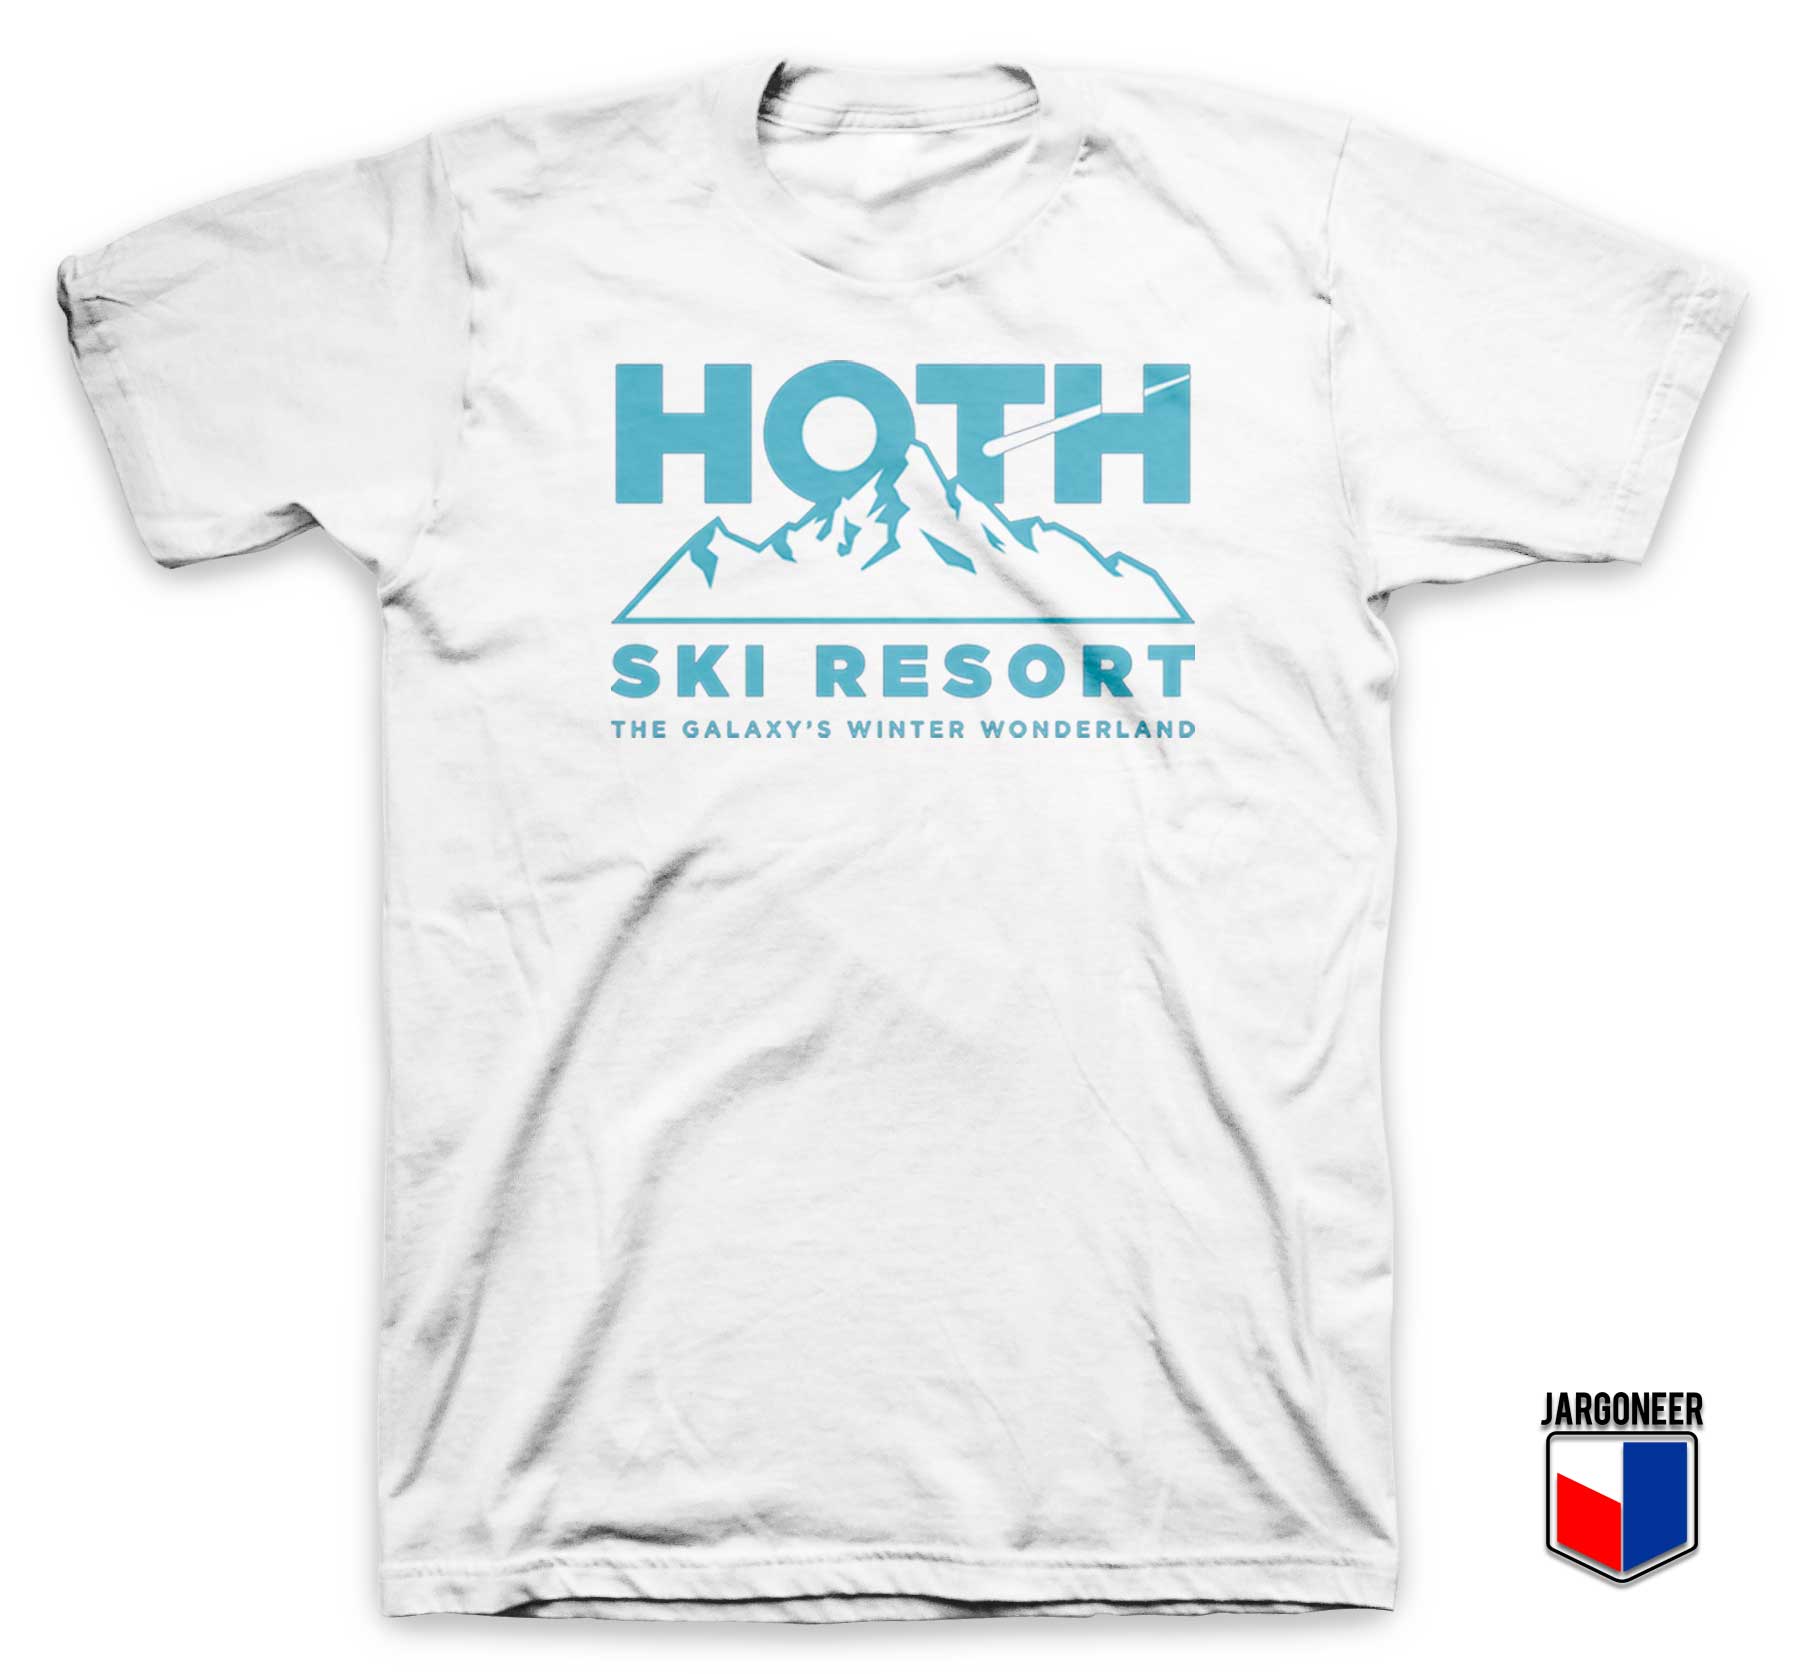 Hoth Ski Resort T Shirt - Shop Unique Graphic Cool Shirt Designs